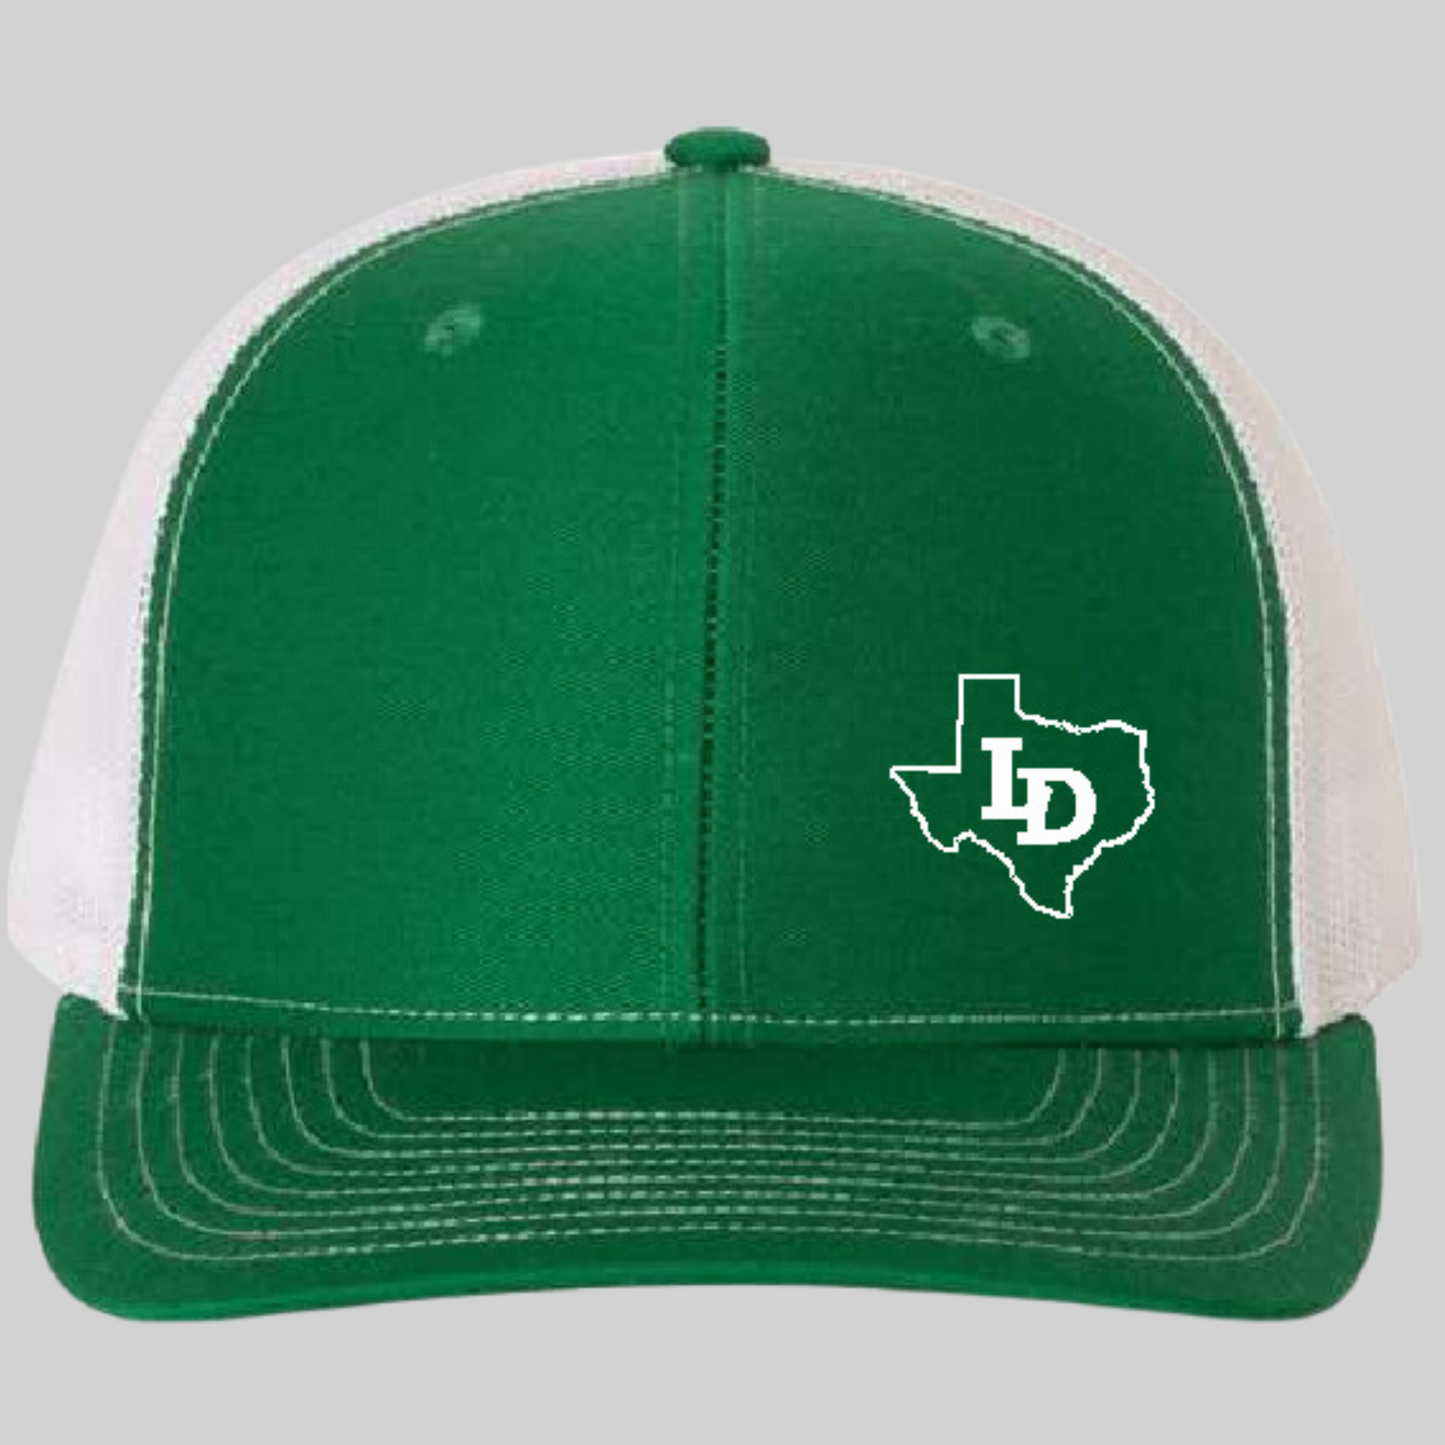 Lake Dallas Elementary Hat